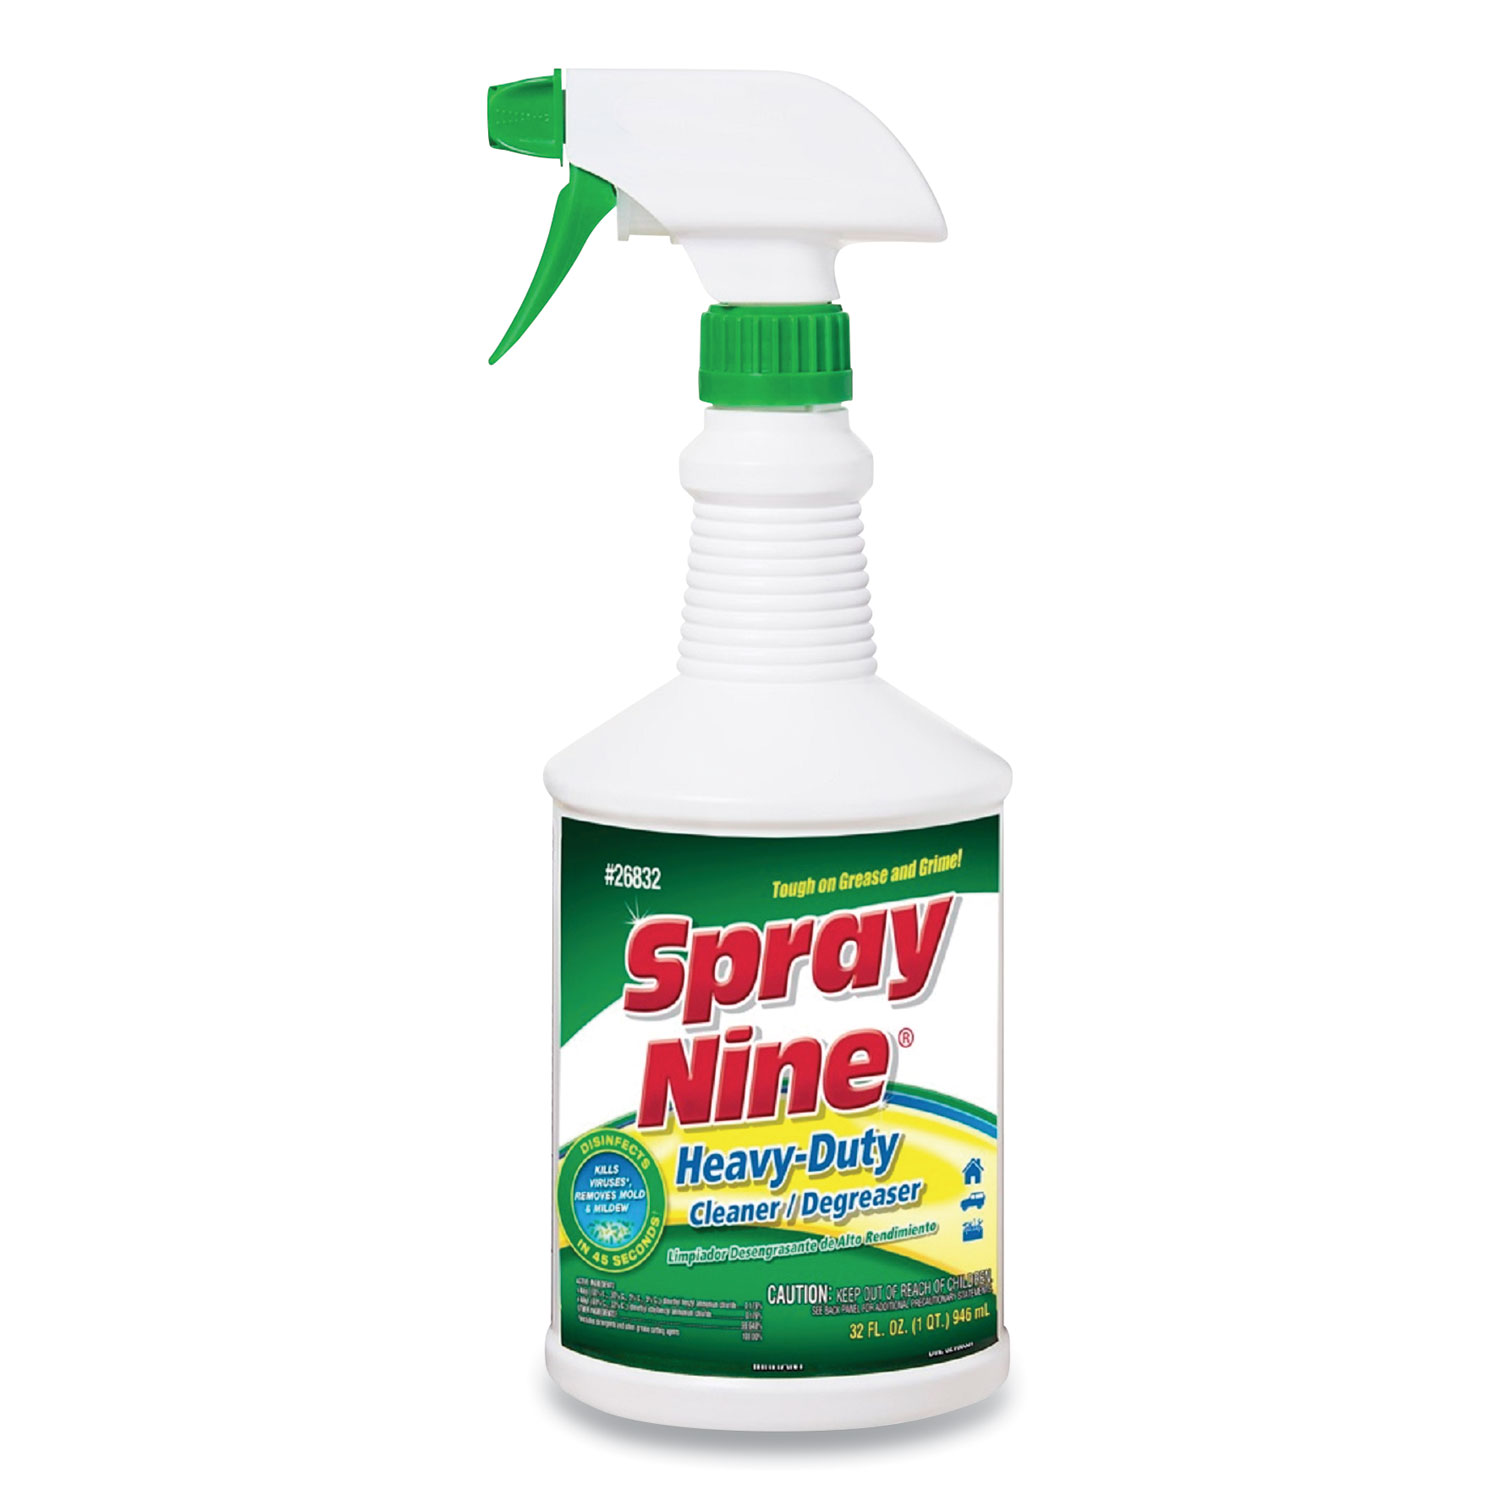  Spray Nine 26833 Heavy Duty Cleaner/Degreaser/Disinfectant, Citrus Scent, 32 oz Bottle, 1 Trigger Sprayer per Carton, 12 Bottles/Carton (ITW26833) 